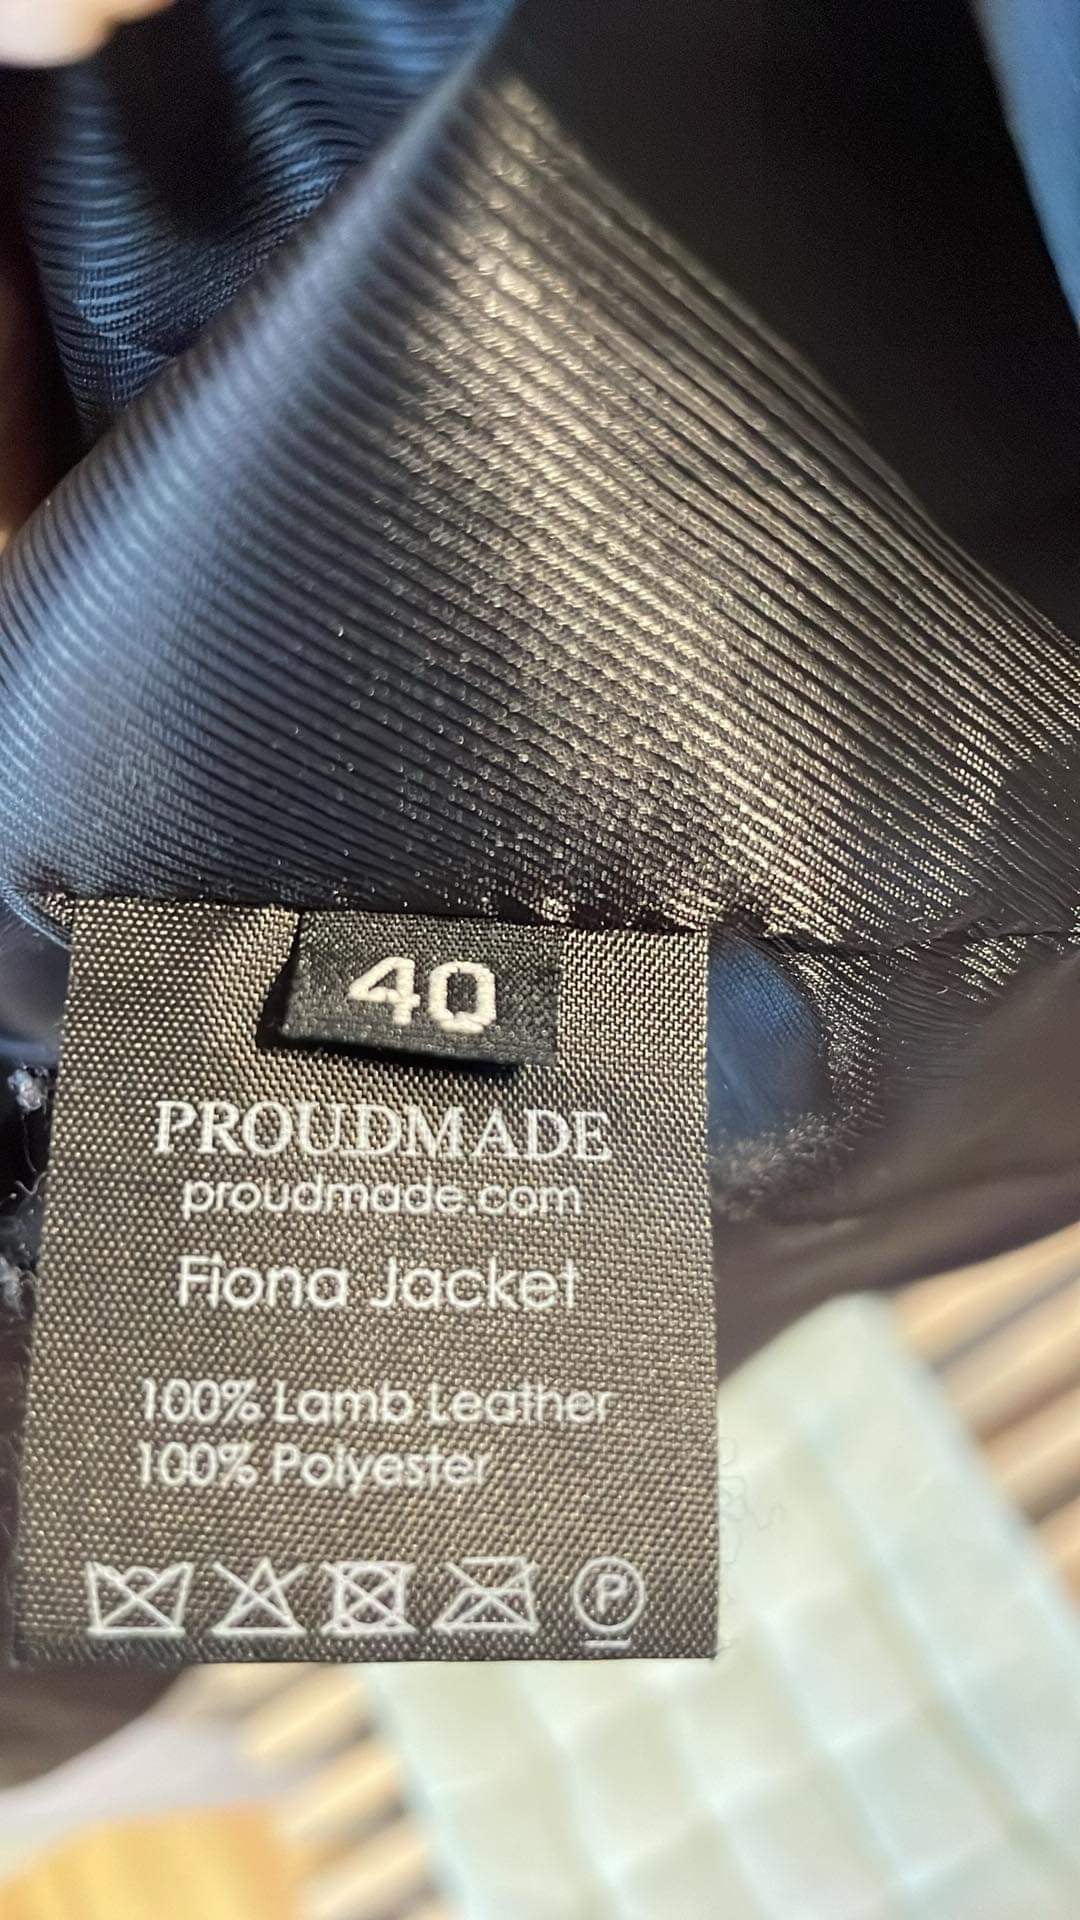 Proudmade - Skindjakke - Size: 40